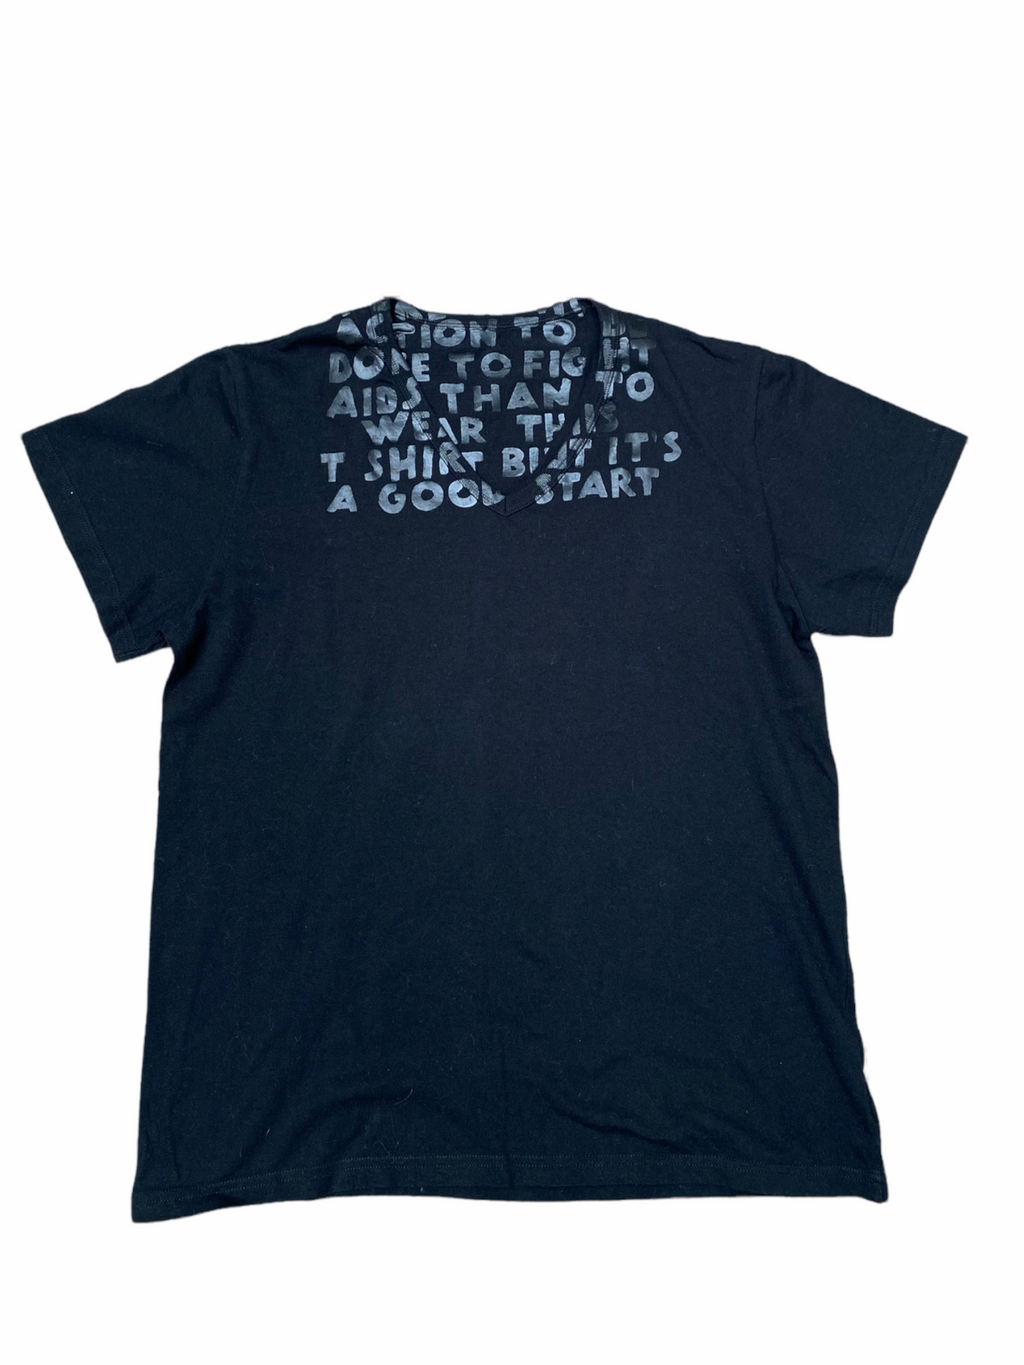 FW 2007  Black Aids T-shirt